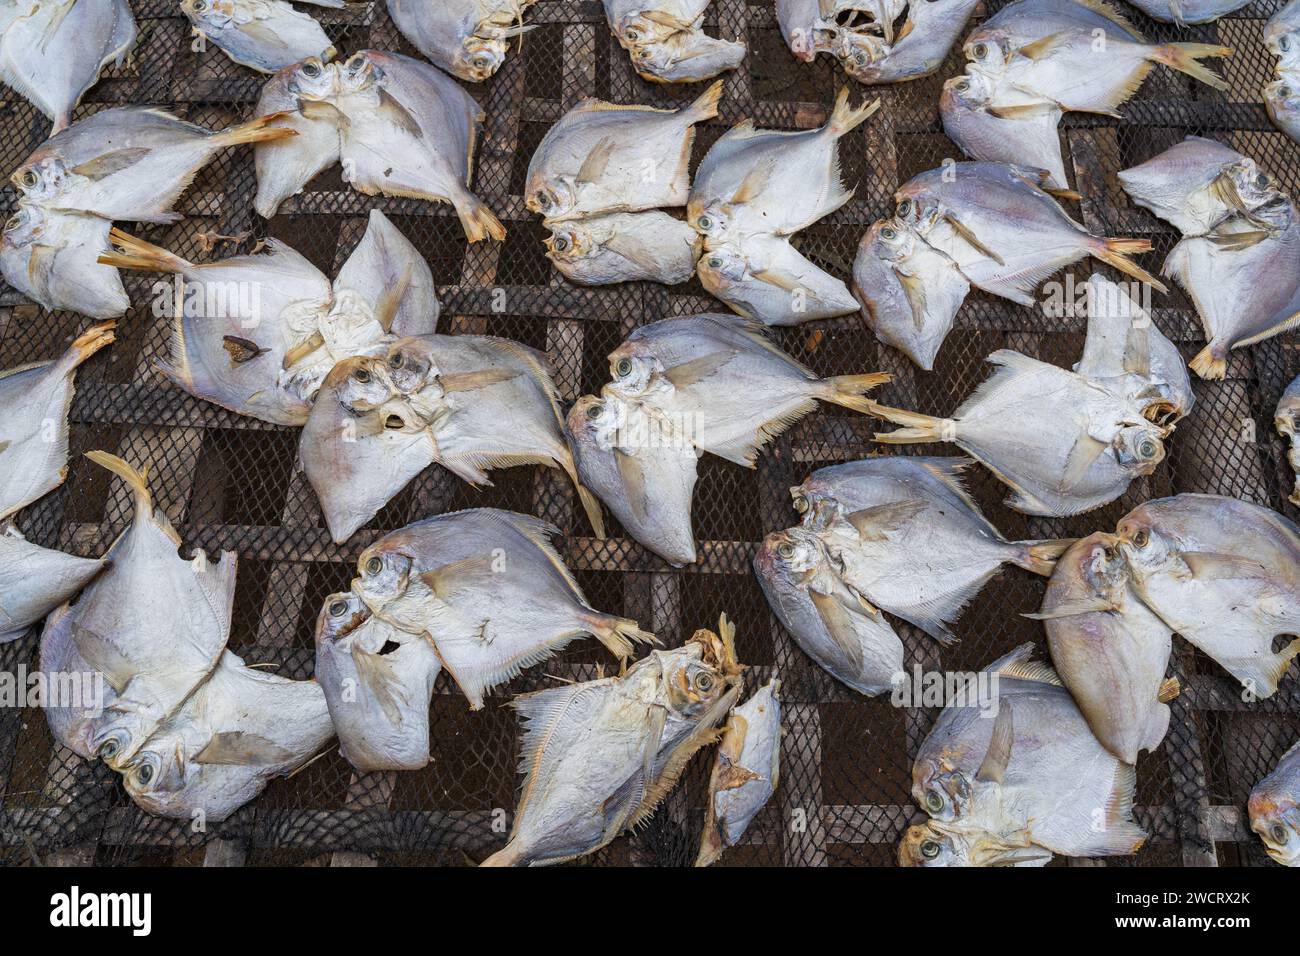 Closeup view of silver pomfret fish or pampus argenteus drying outdoors on bamboo rack, Maheshkhali island, Cox's Bazar, Bangladesh Stock Photo